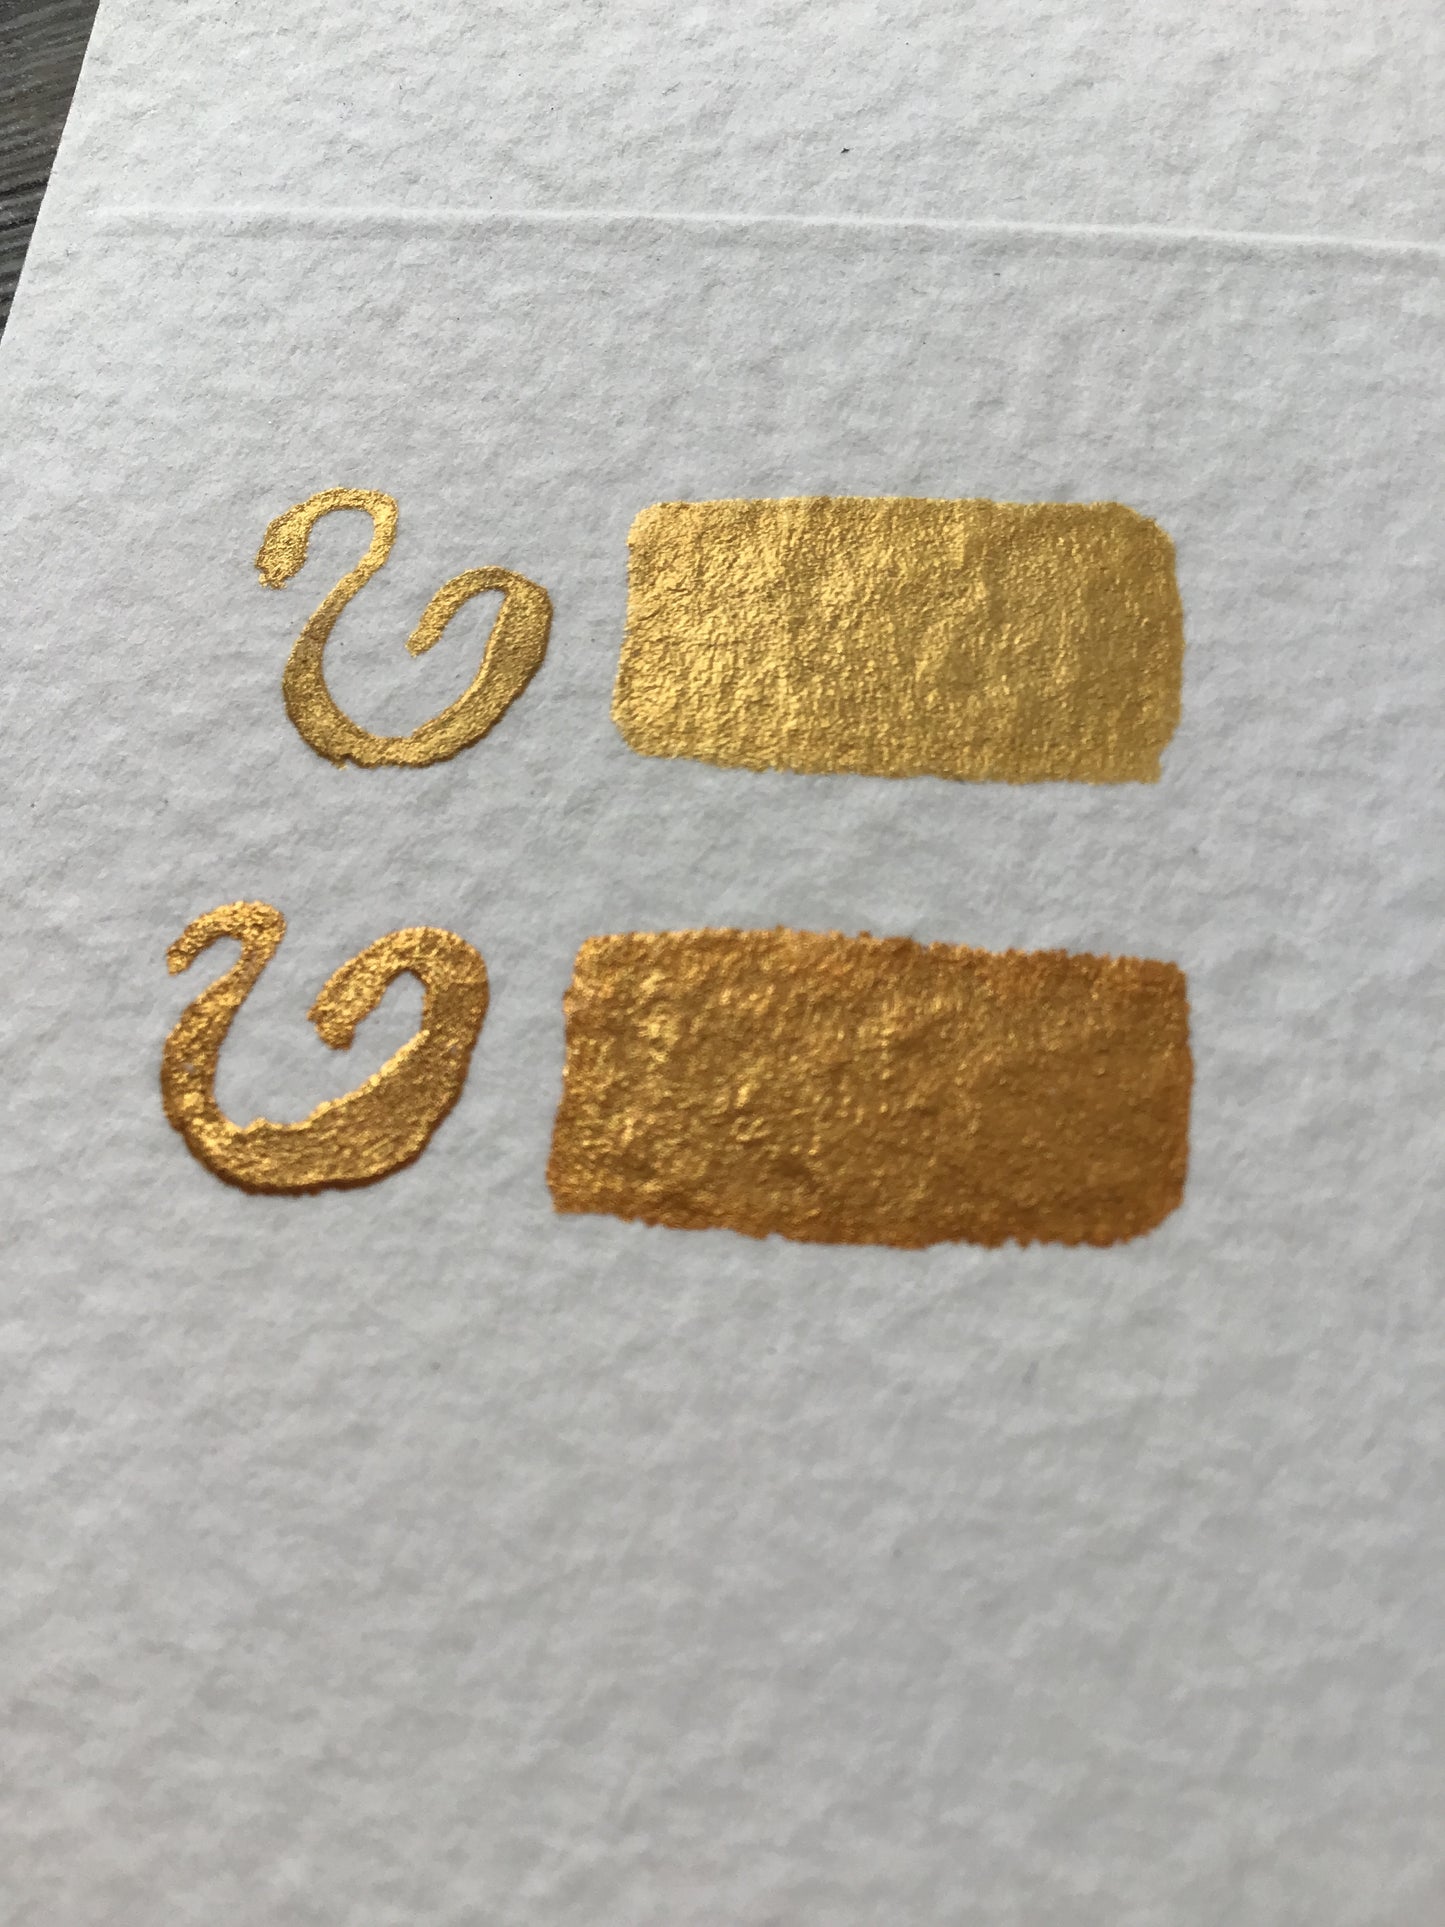 Gold Bar Handmade Watercolour, Metallic